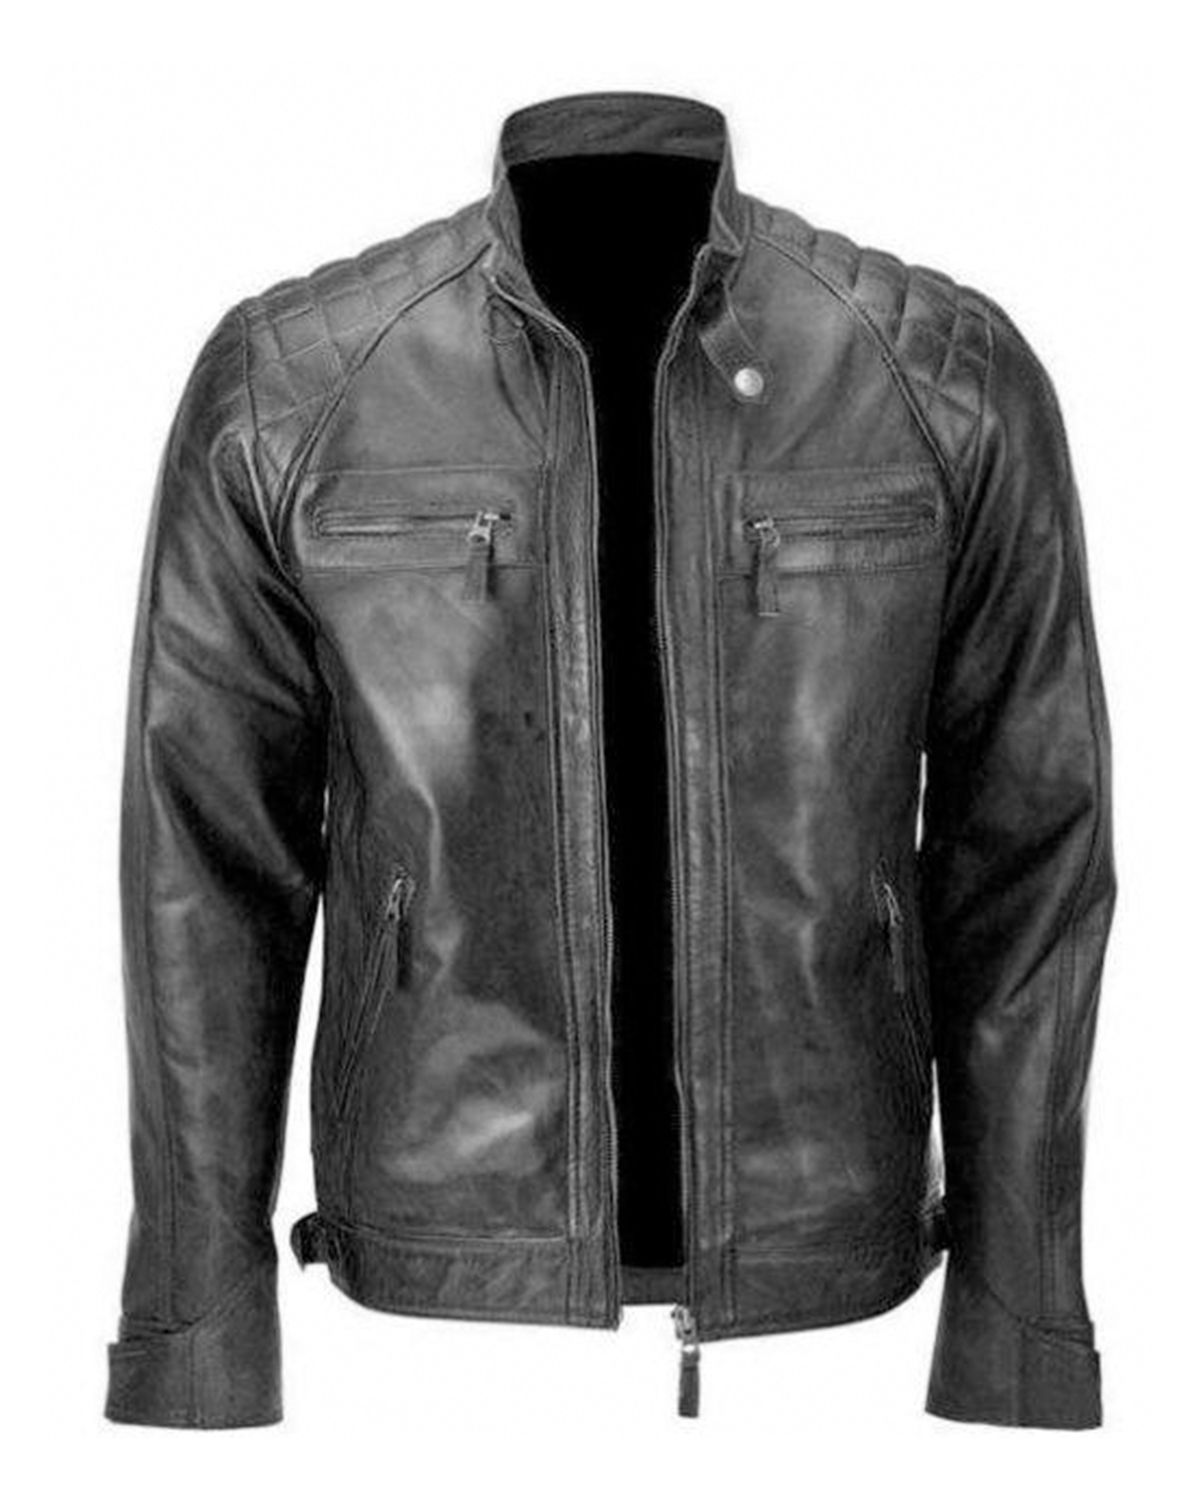 Elite Men's Distressed Black Skull Rider Leather Jacket